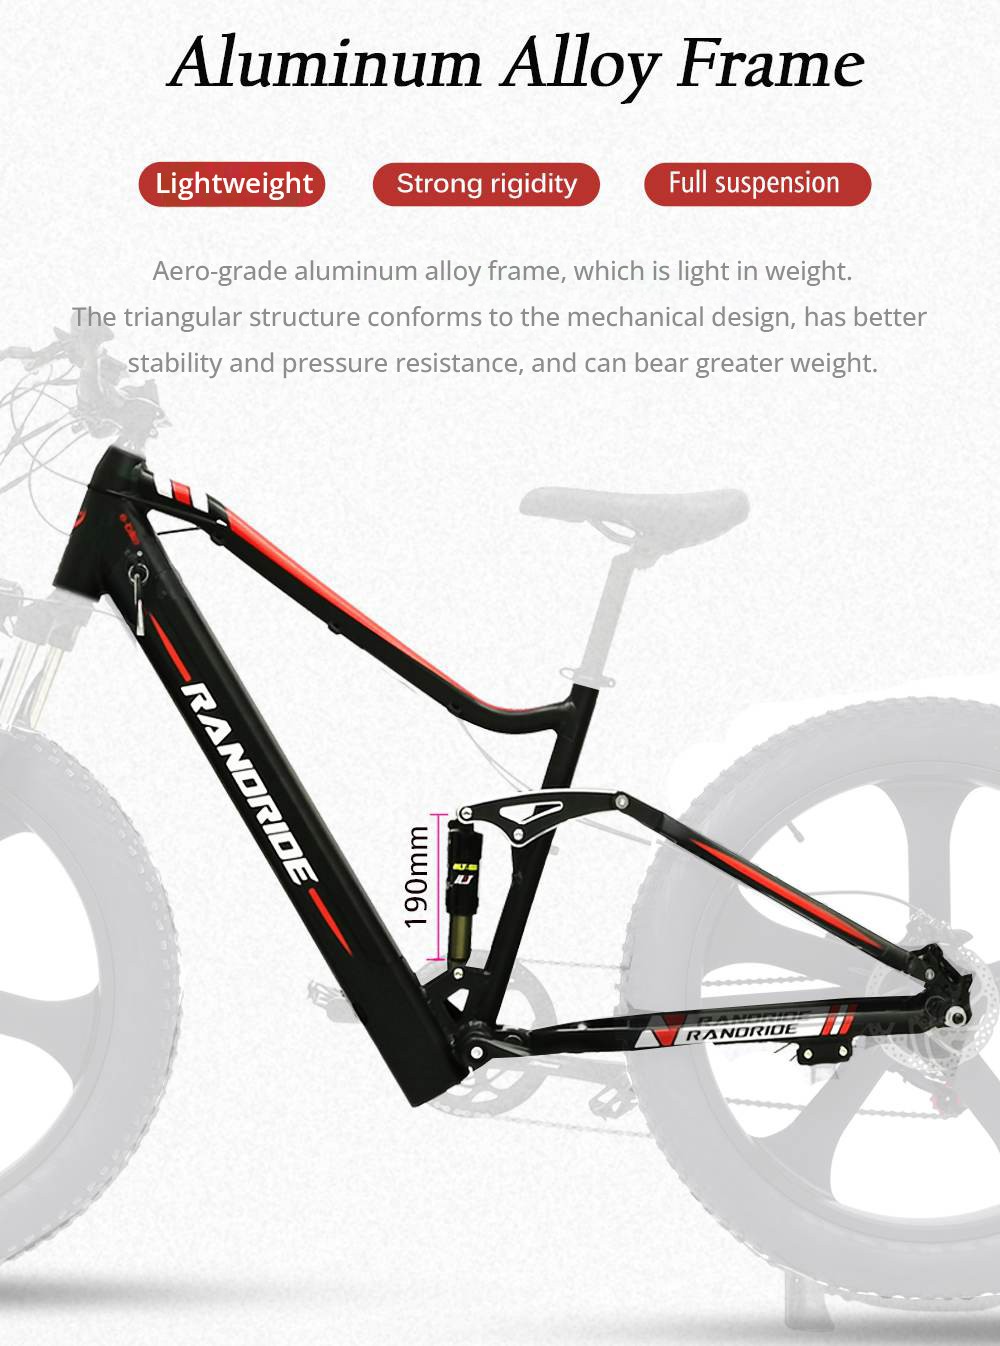 RANDRIDE YX90M Elektrische fiets, 26 dikke band, 1000W borstelloze motor, 48V13.6Ah accu, 45km/h max snelheid